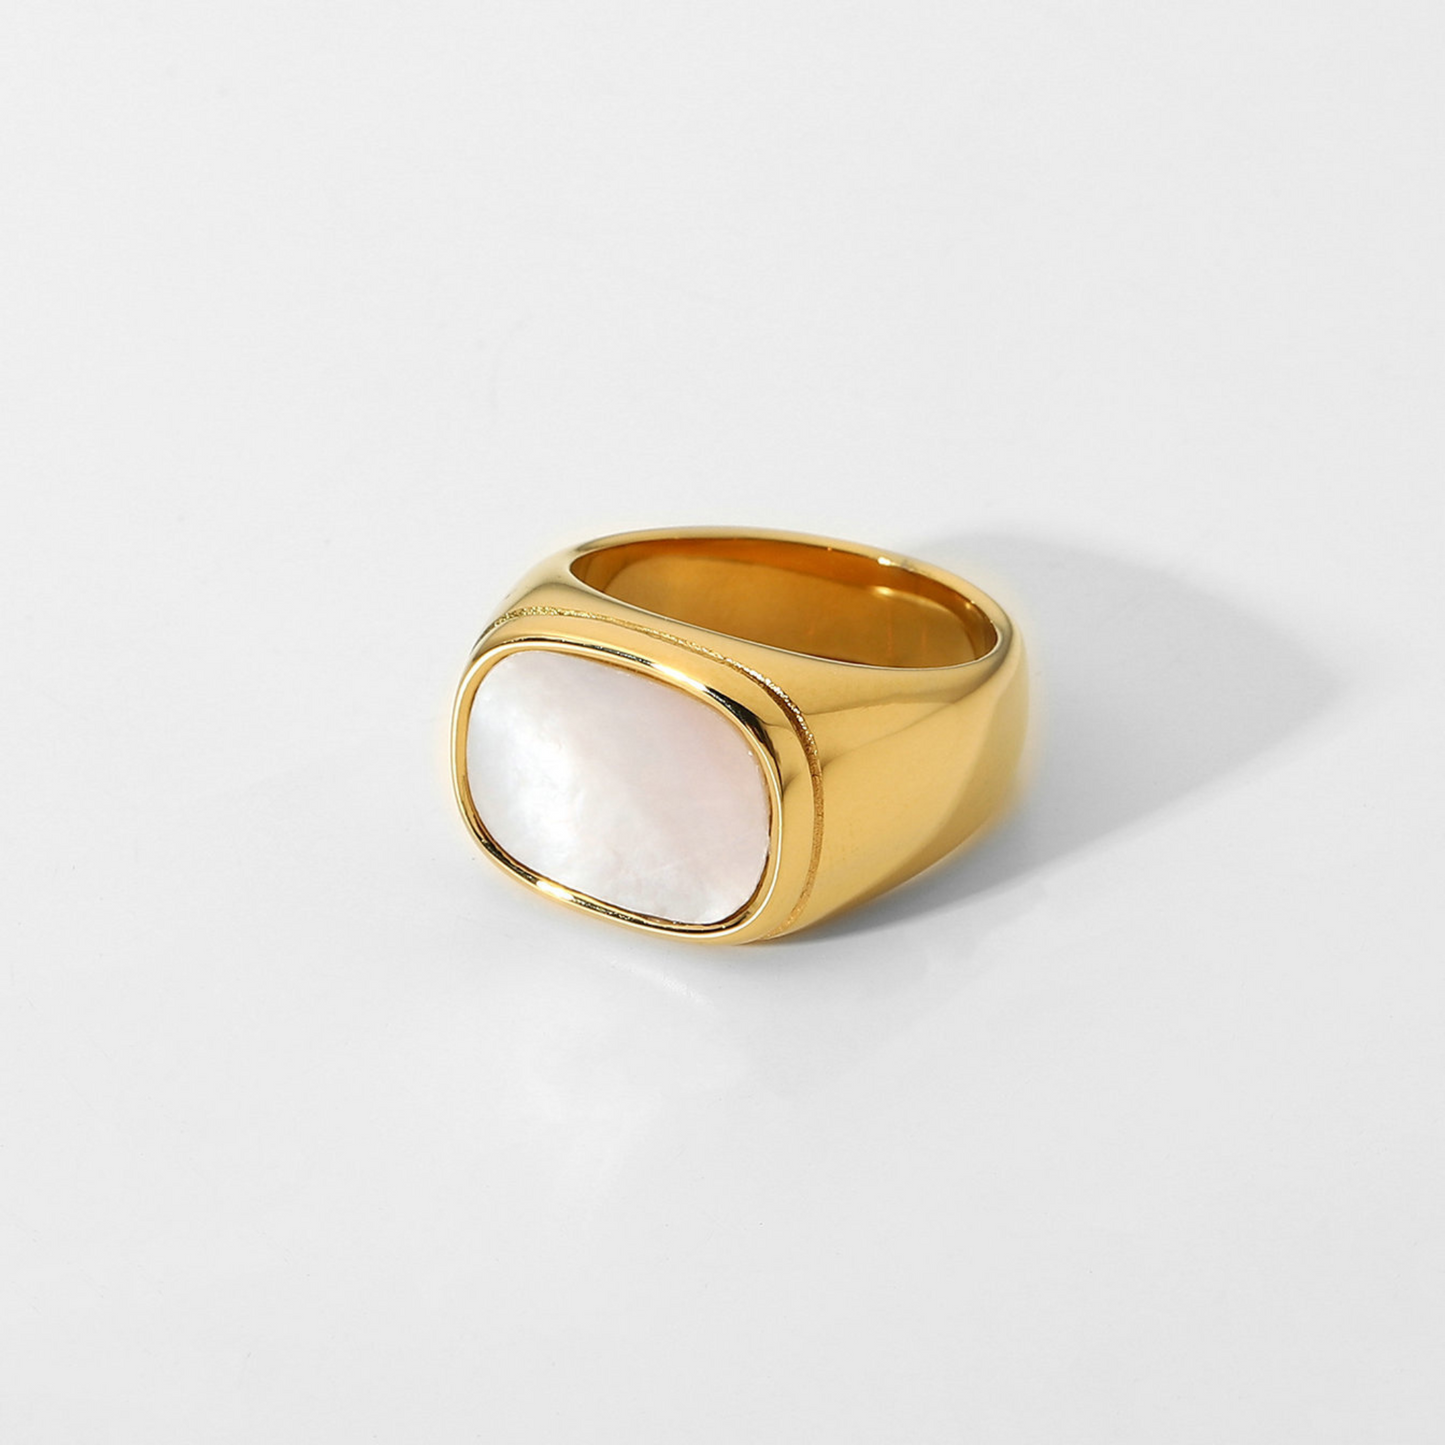 Minimalist Gold Signet Ring for Women